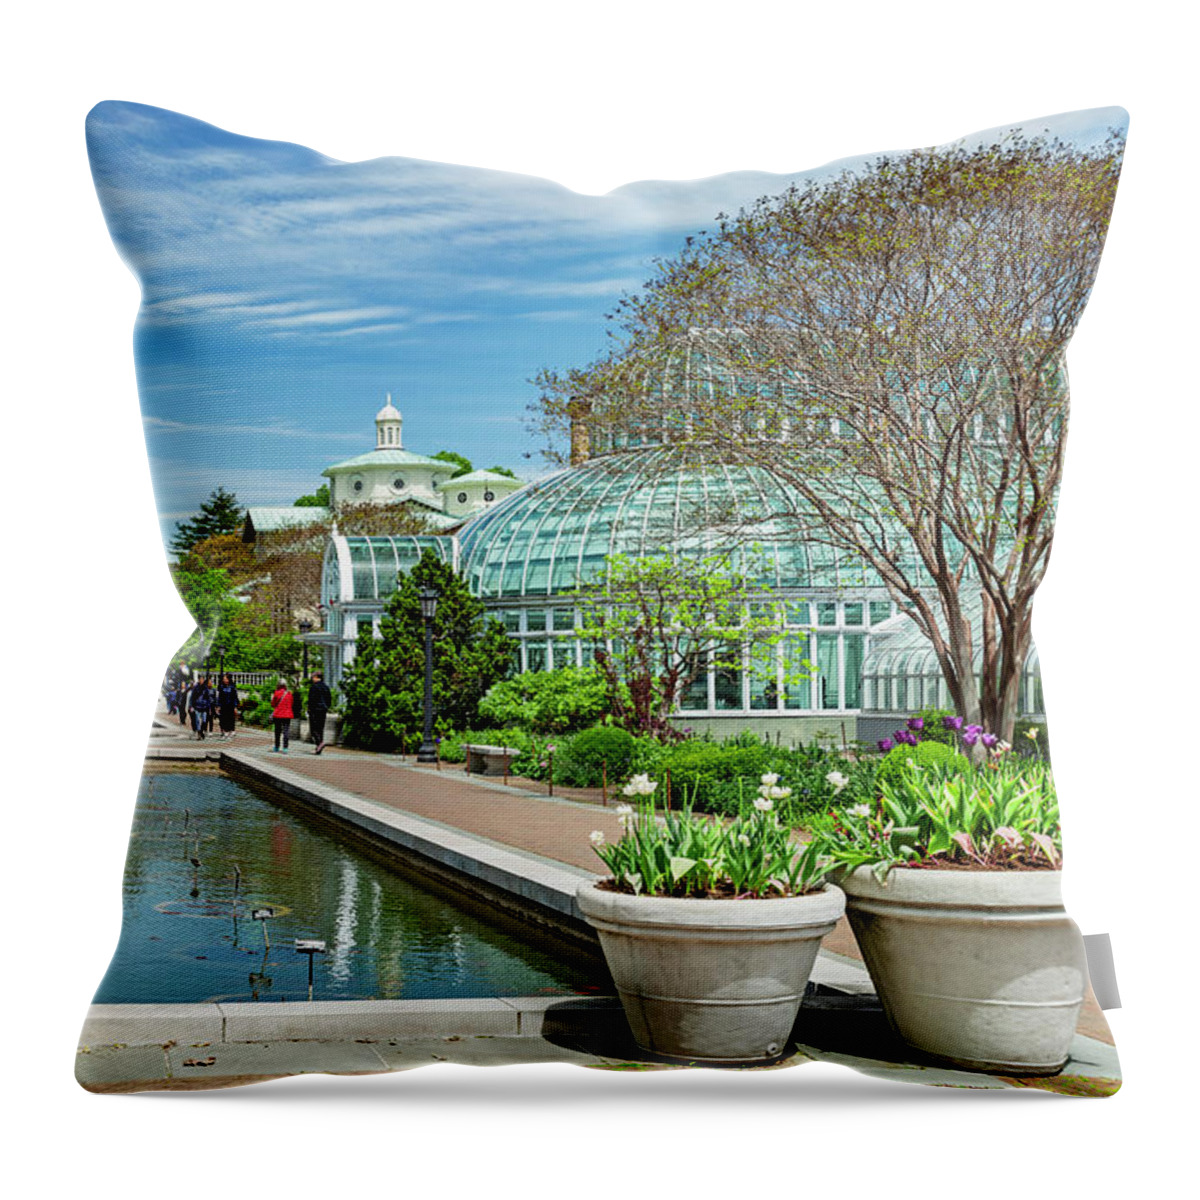 Estock Throw Pillow featuring the digital art Brooklyn Botanic Garden, Nyc by Claudia Uripos